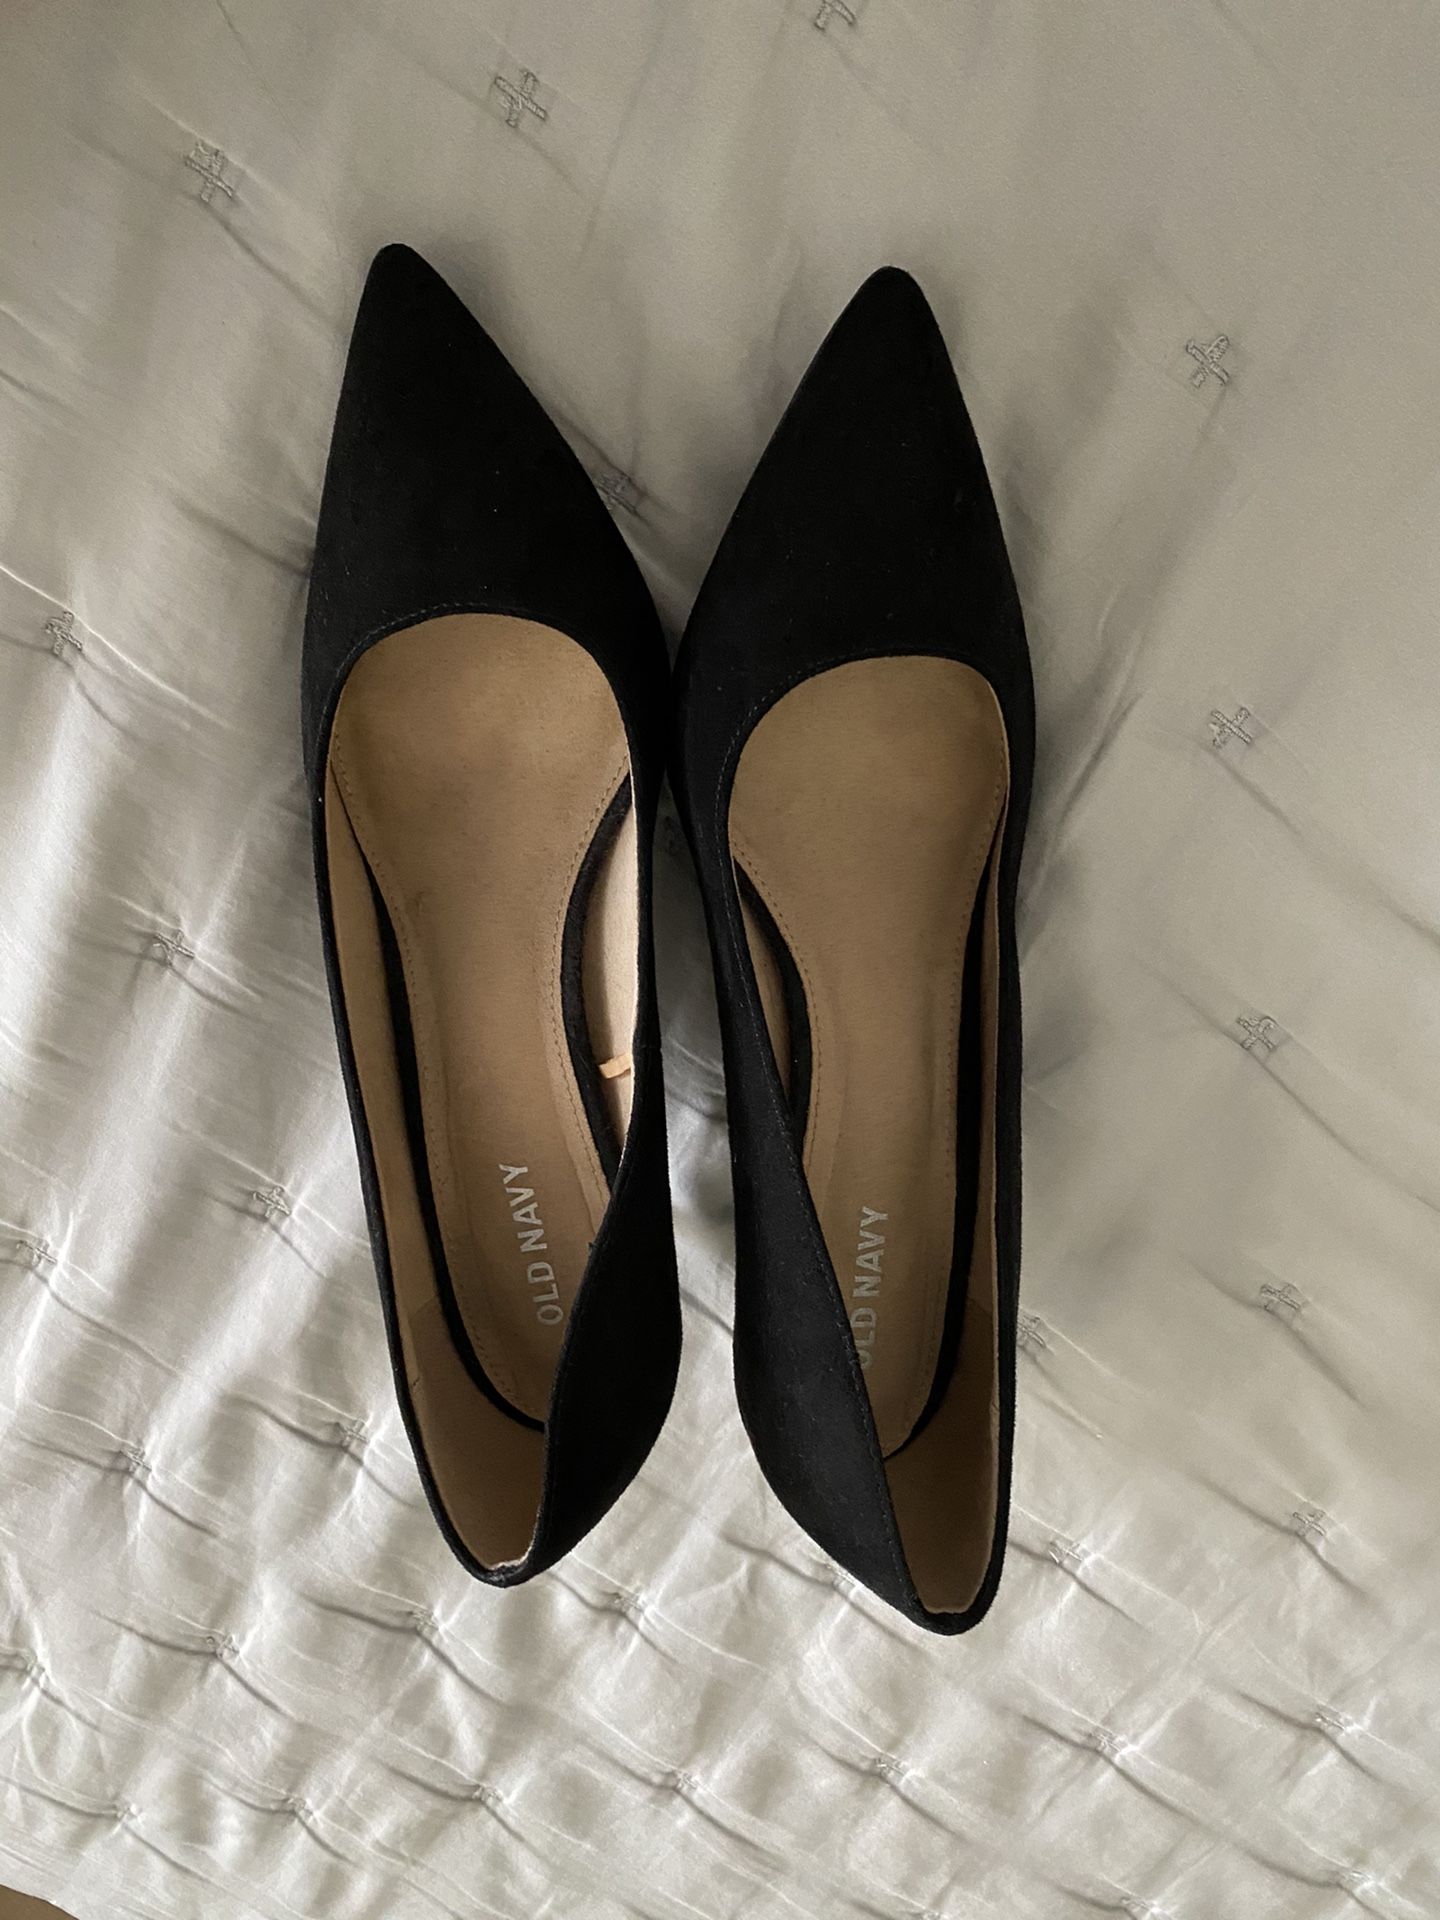 Black heels size 7